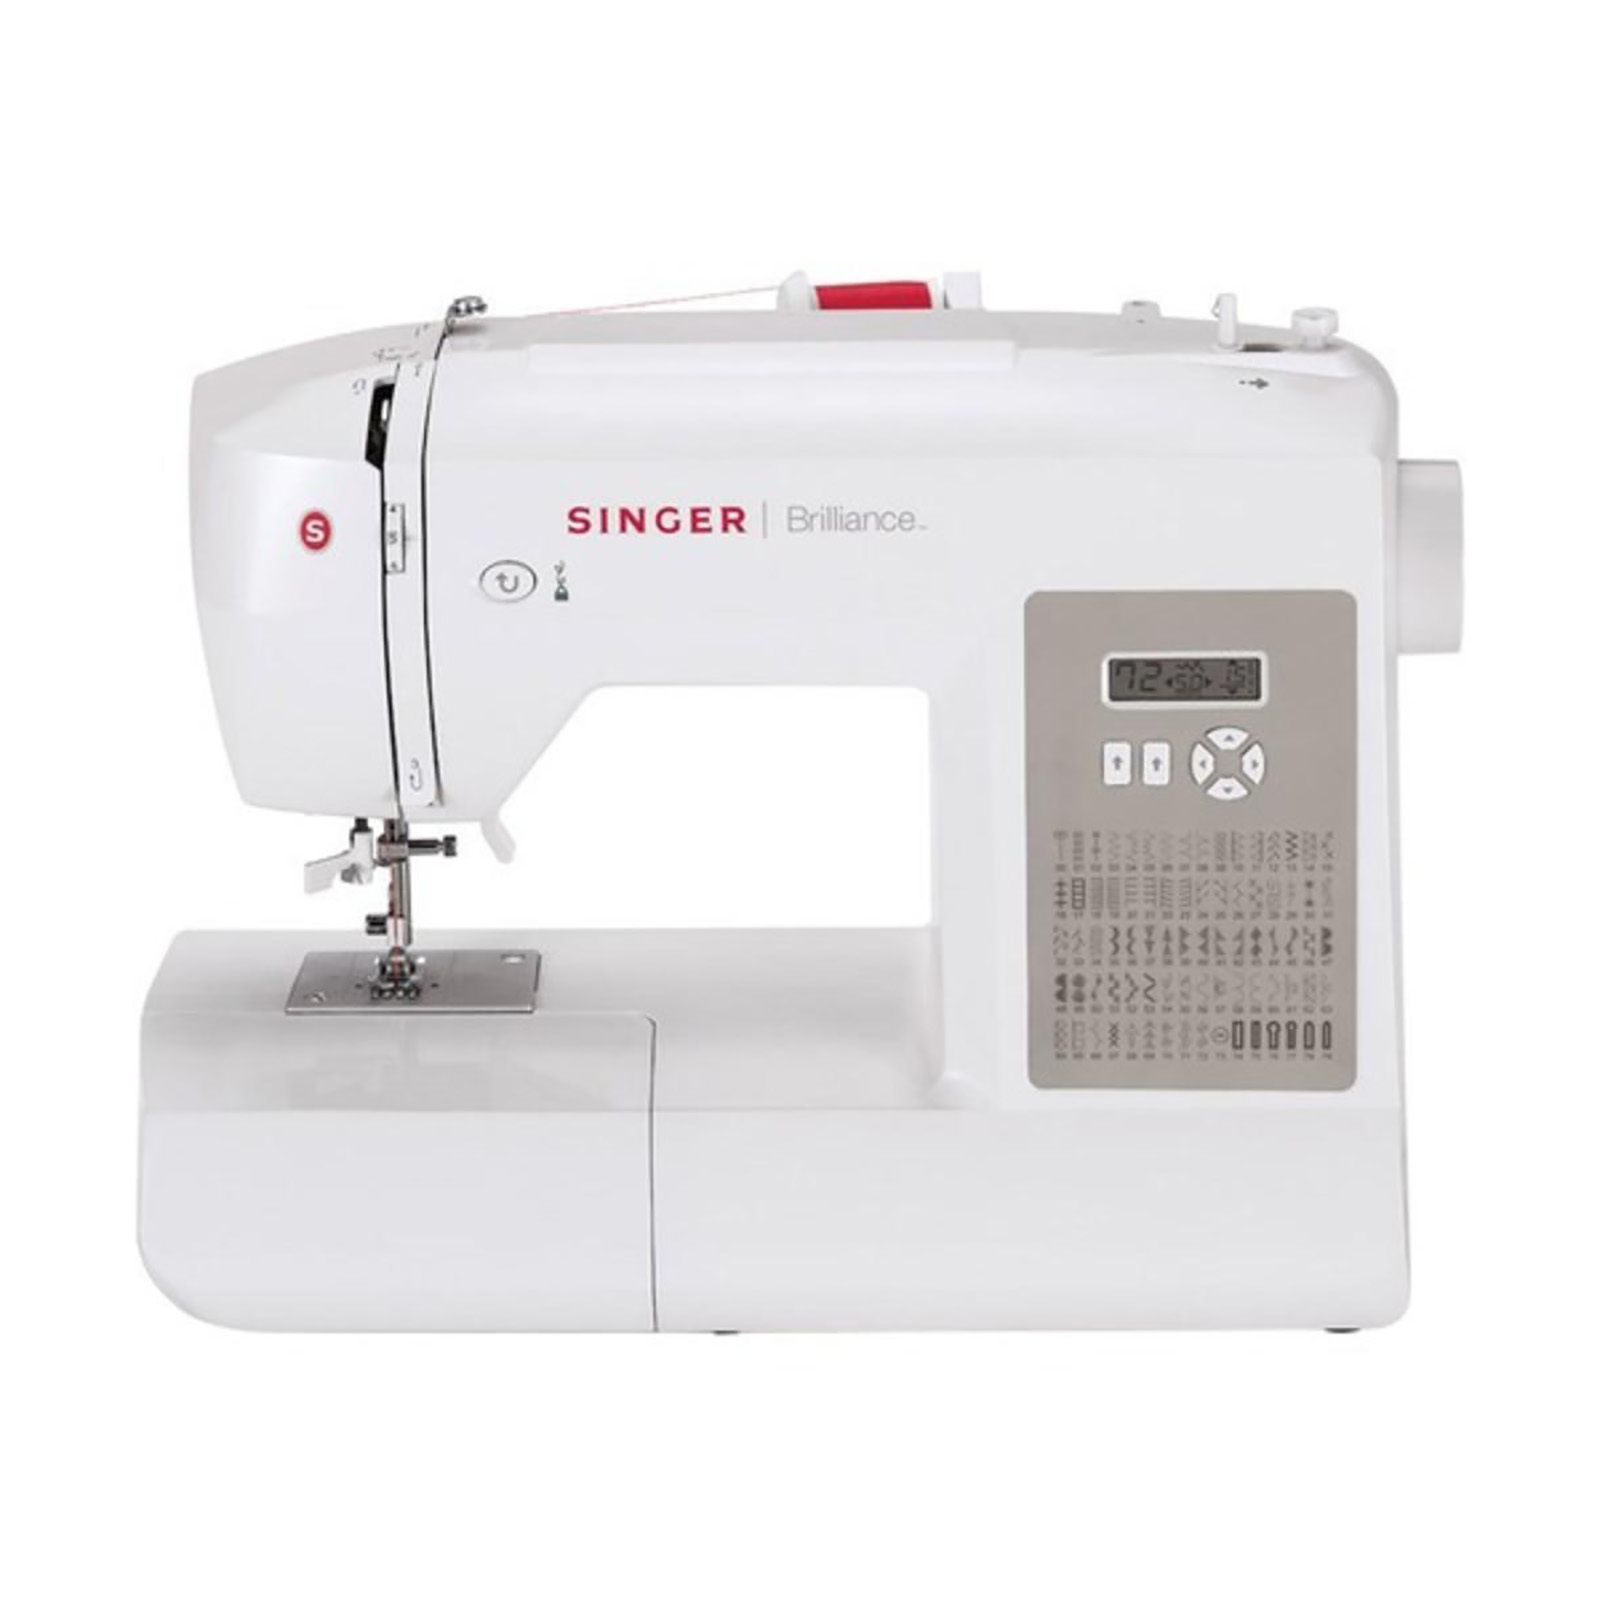 Singer Sewing 230061112 6180 Brilliance Sewing Machine